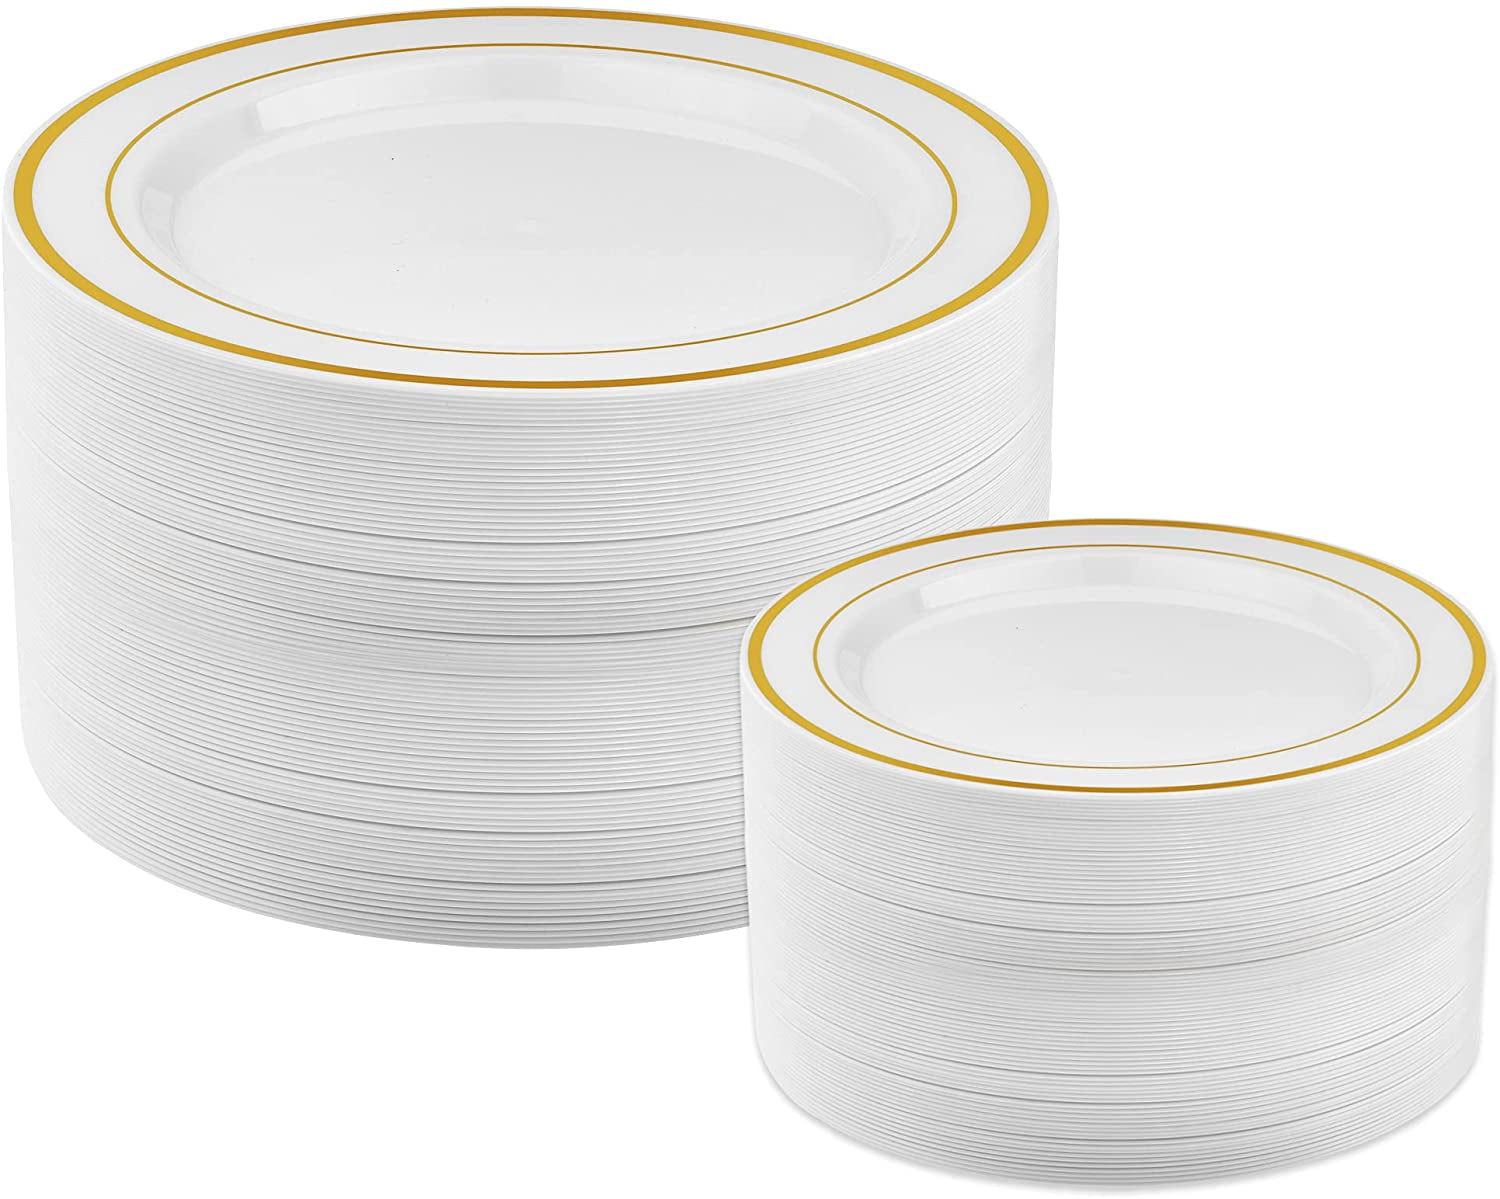 Reli. 50 Pcs Plastic Dessert Plates, Disposable (6 inch, Clear